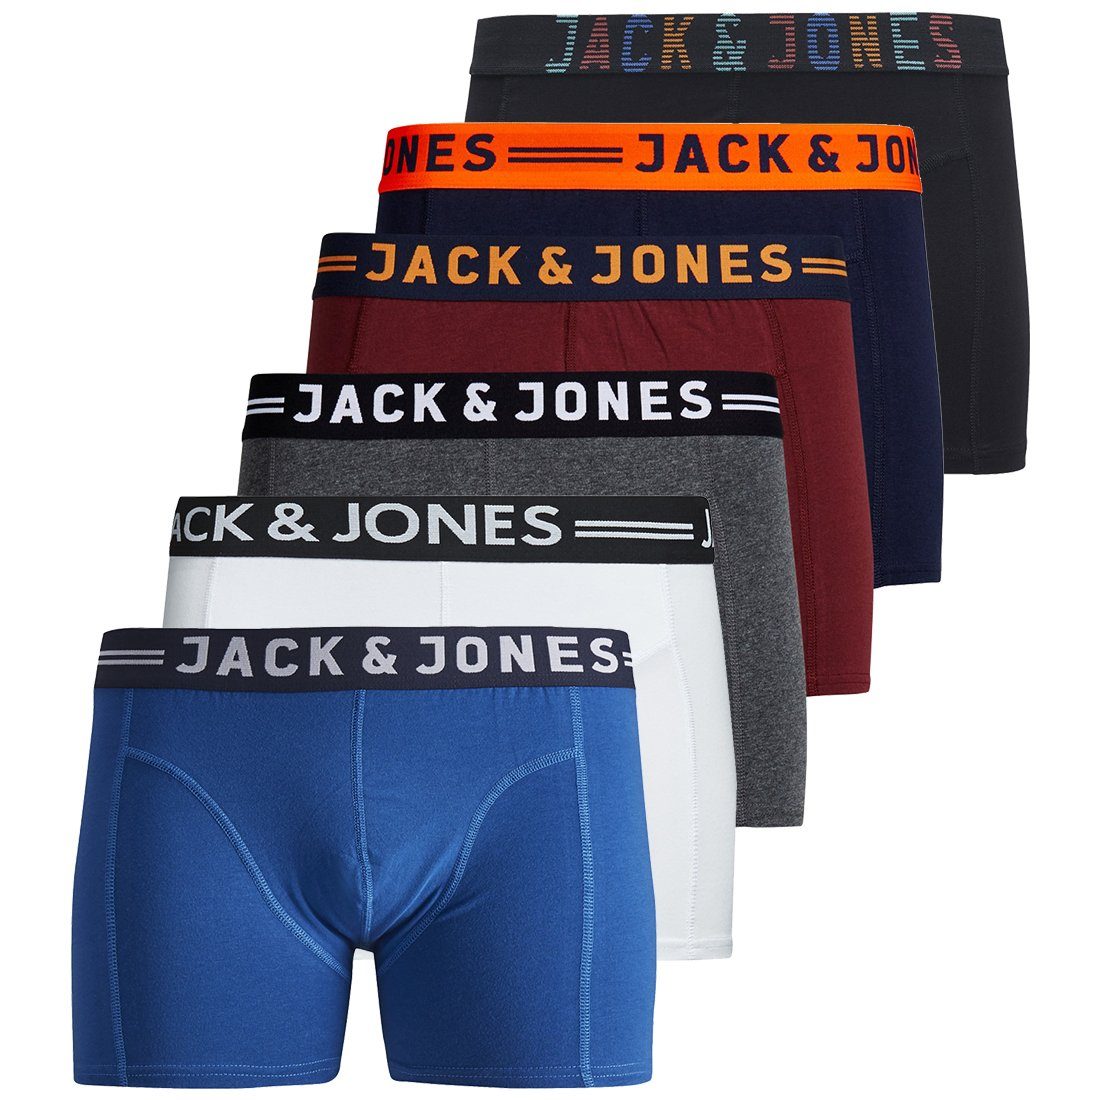 Jack & Jones Boxershorts JACK JONES Boxershorts 6er Pack Herren Männer Short Unterhose Marke S M L XL XXL Mehrfarbig3